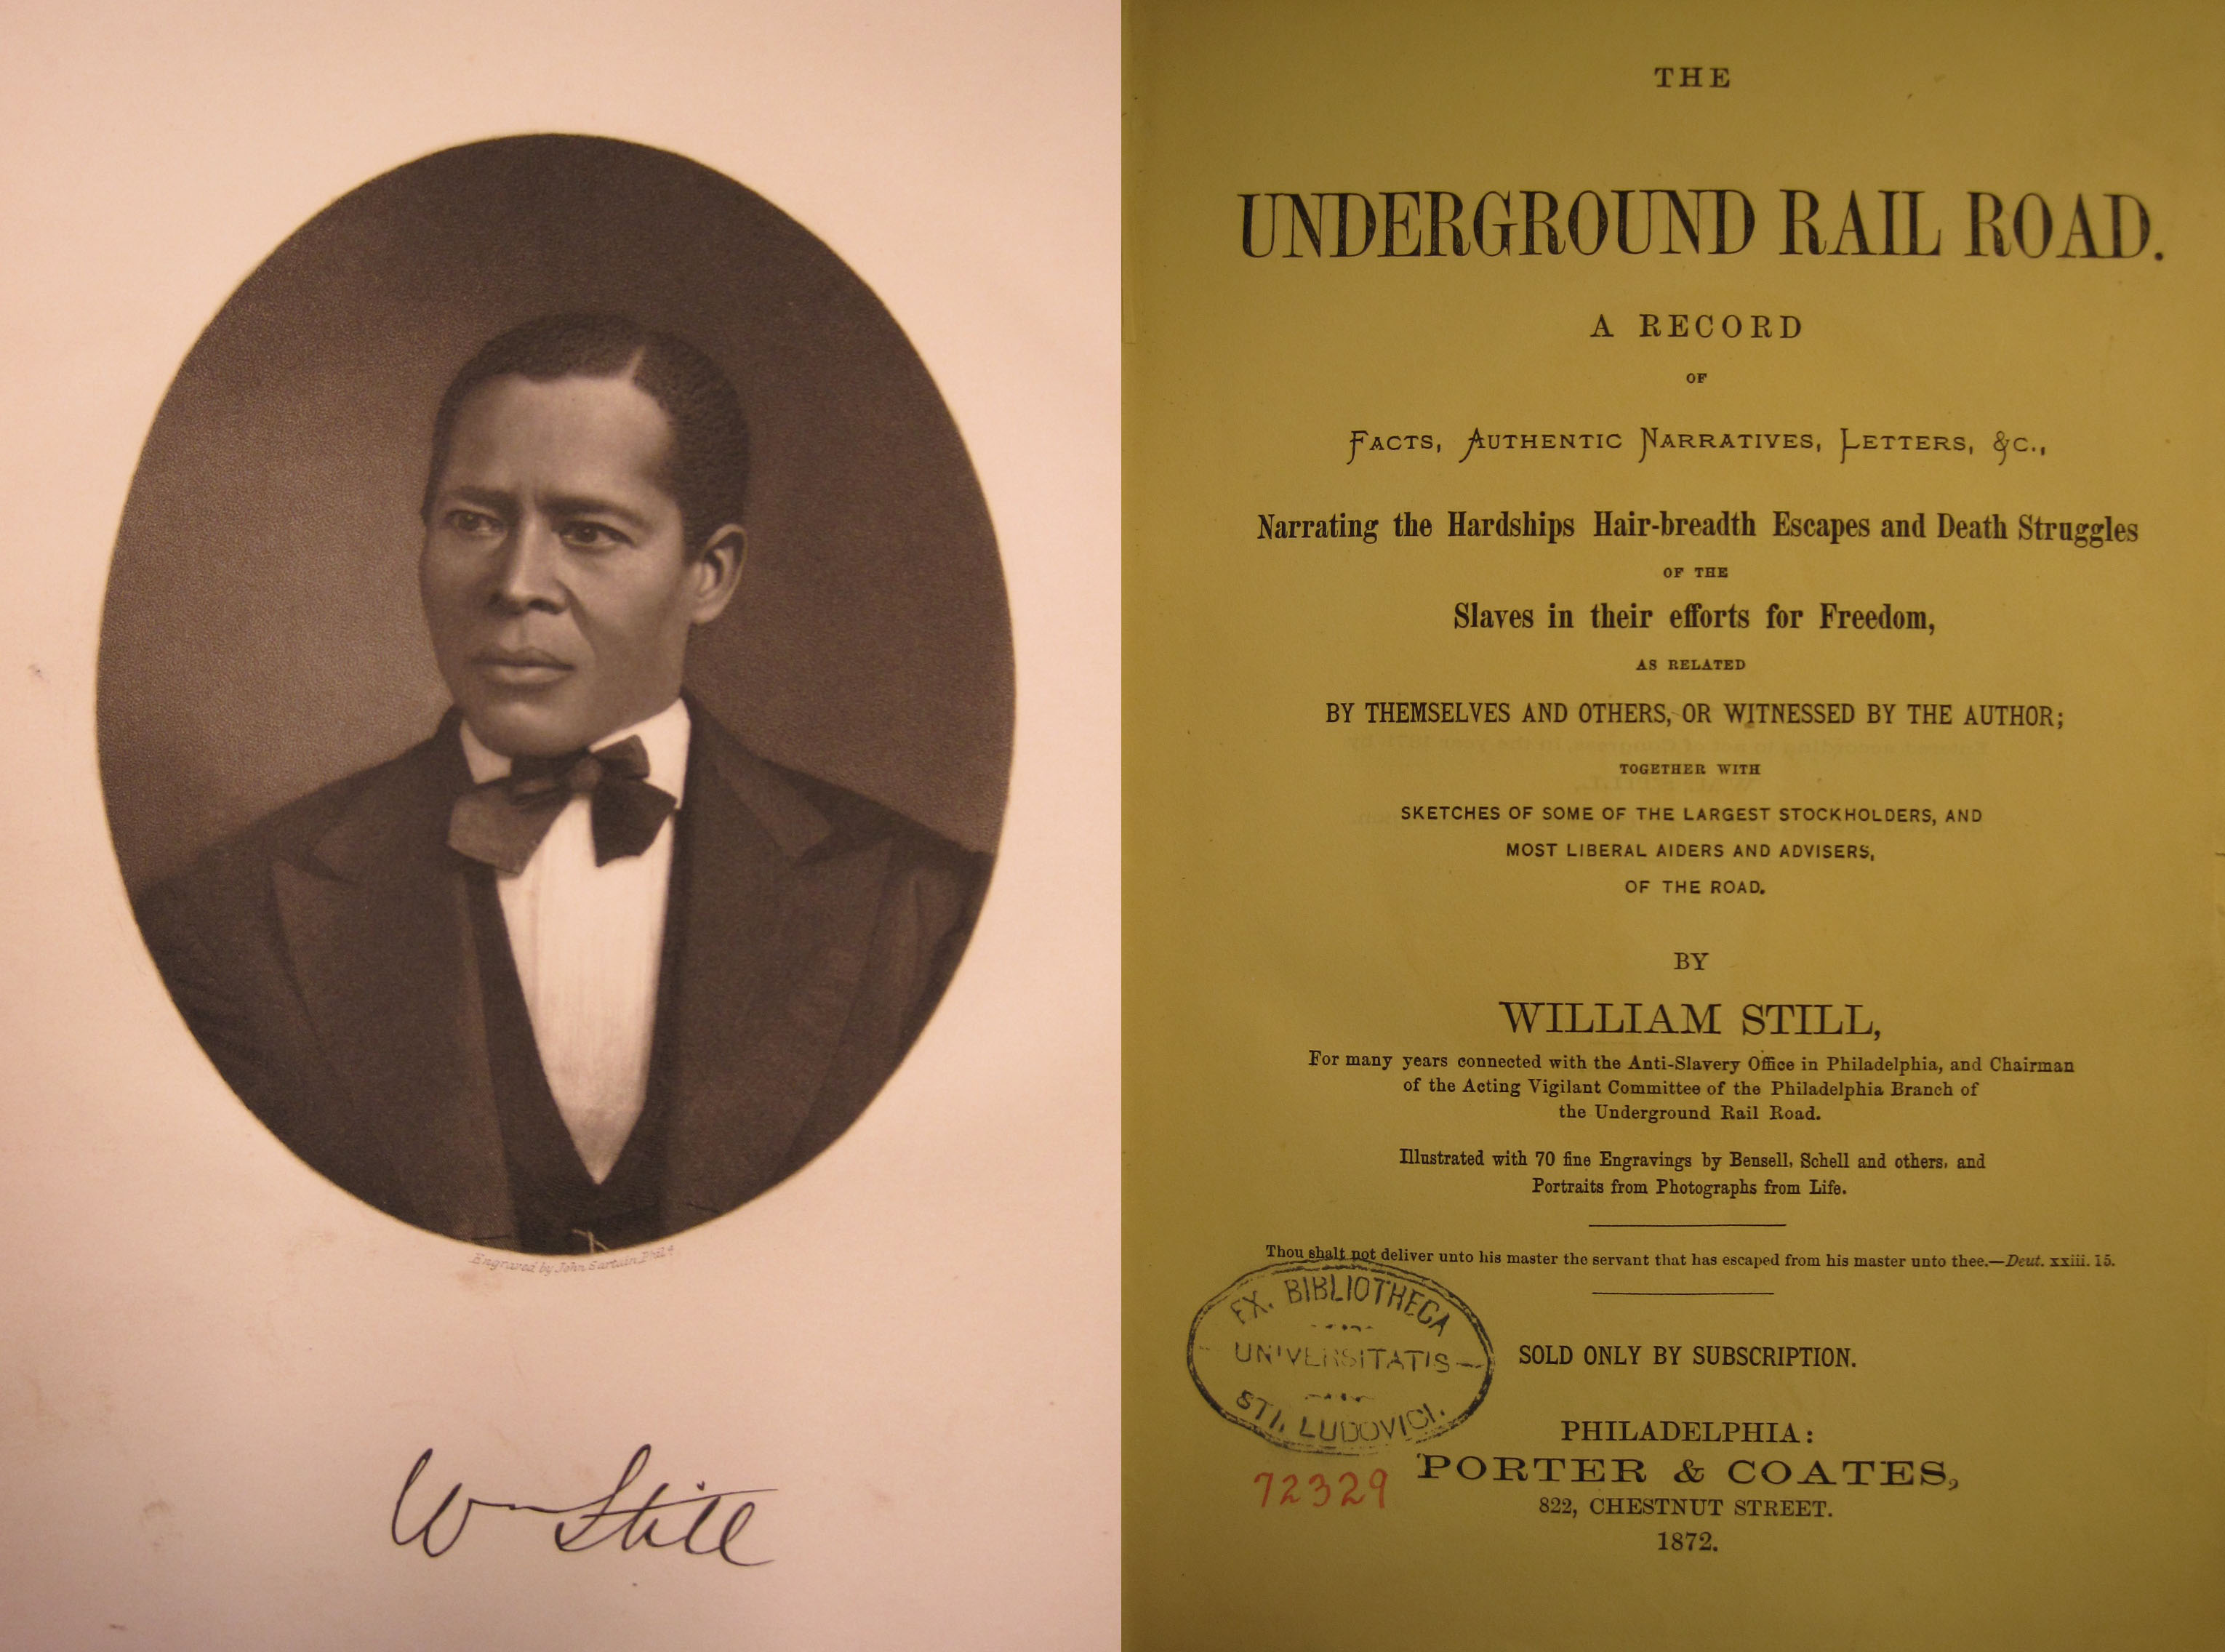 The Underground Rail Road (1872)